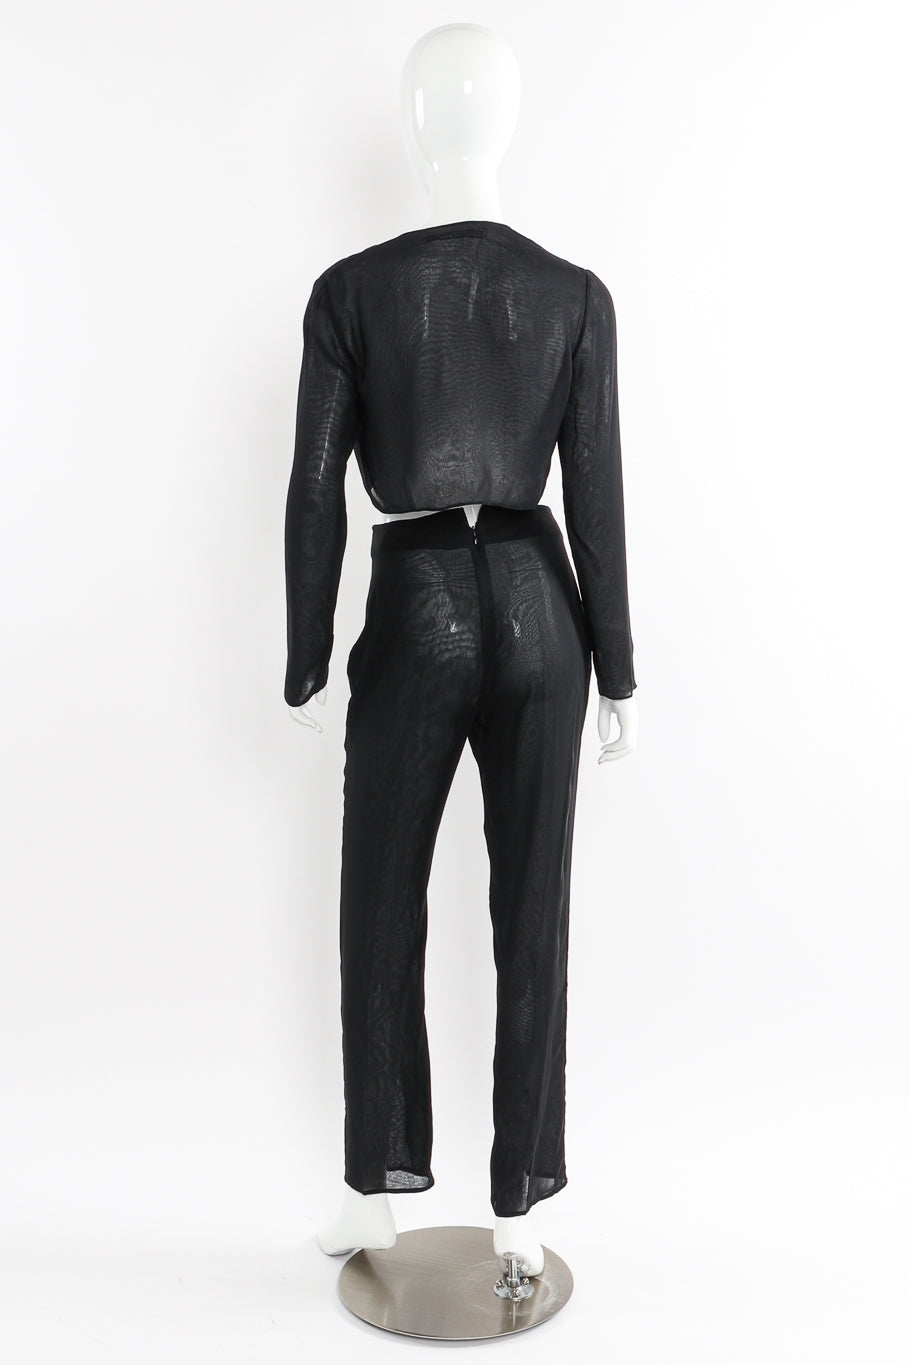 Vintage Richard Tyler Silk Bolero Top and Pants Set back view on mannequin @Recessla